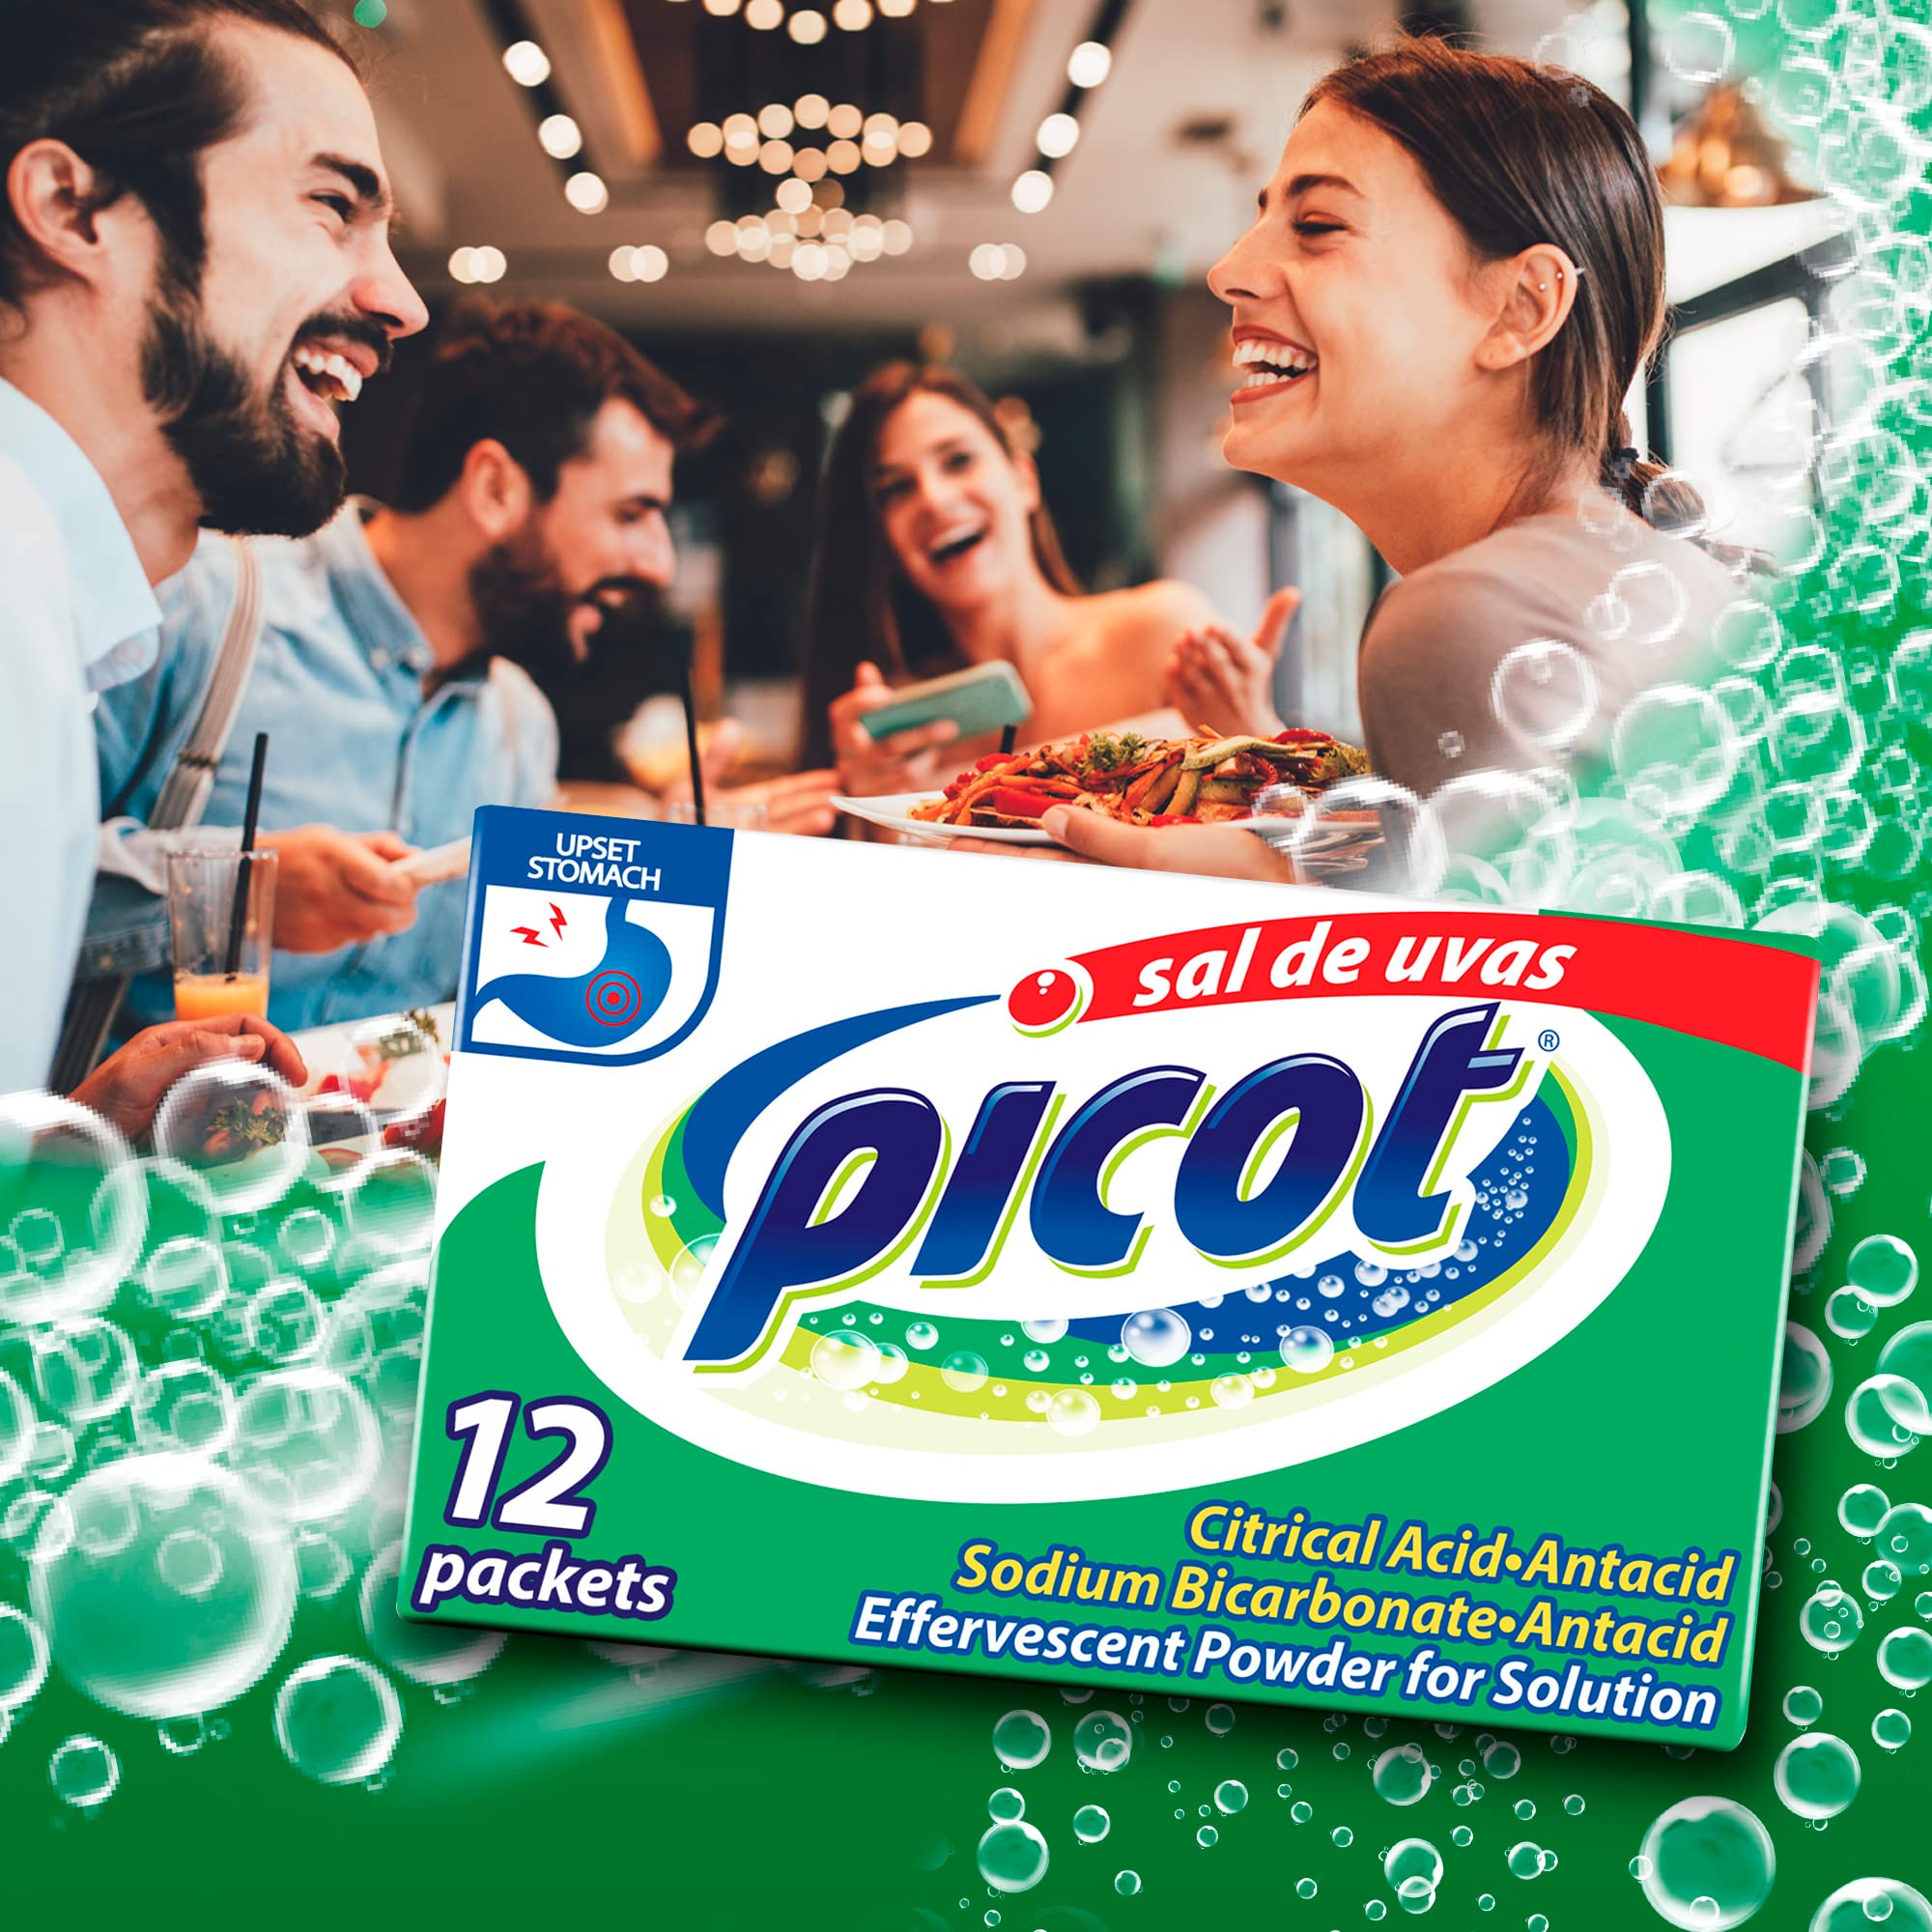 Sal de Uvas Picot, Effervescent Powder Solution, Antacid, 3-Pack of 12 Antacid Packets, 3 Boxes